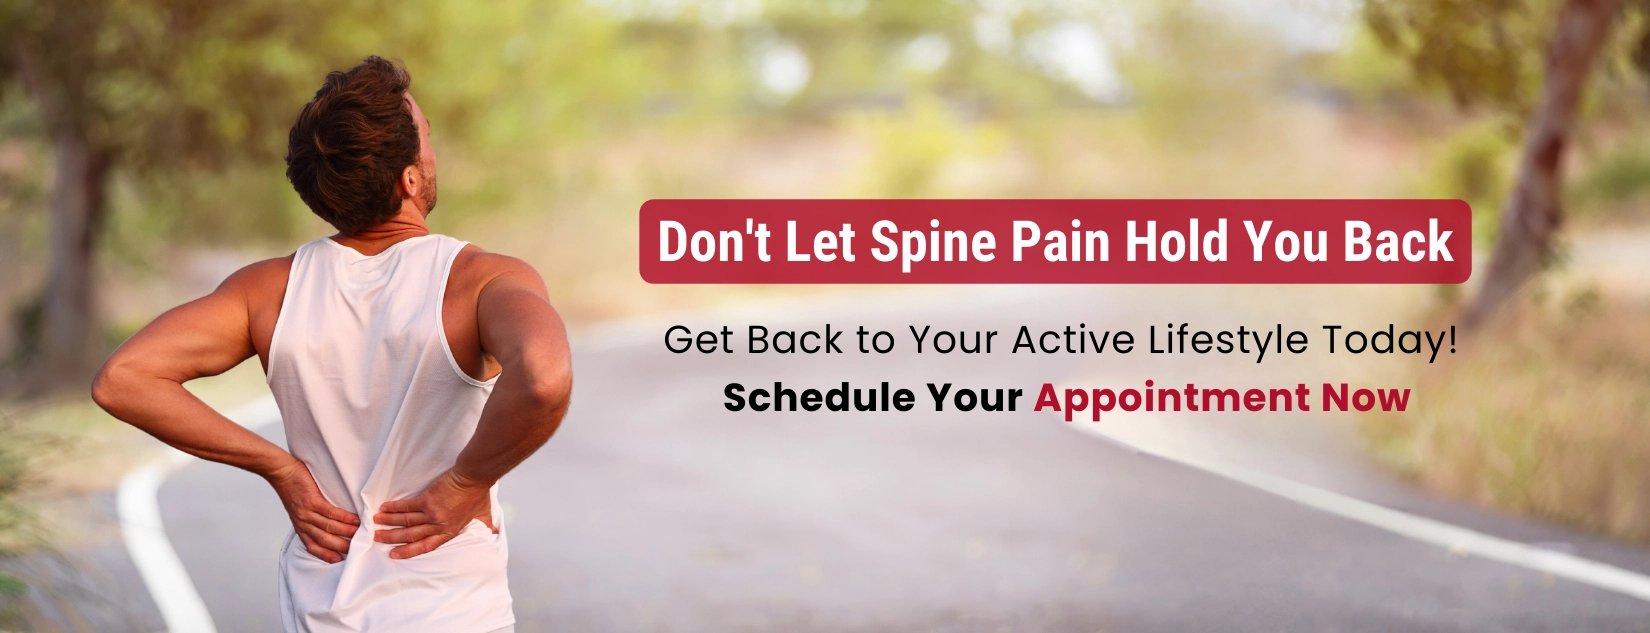 Spine Pain Consultation Banner